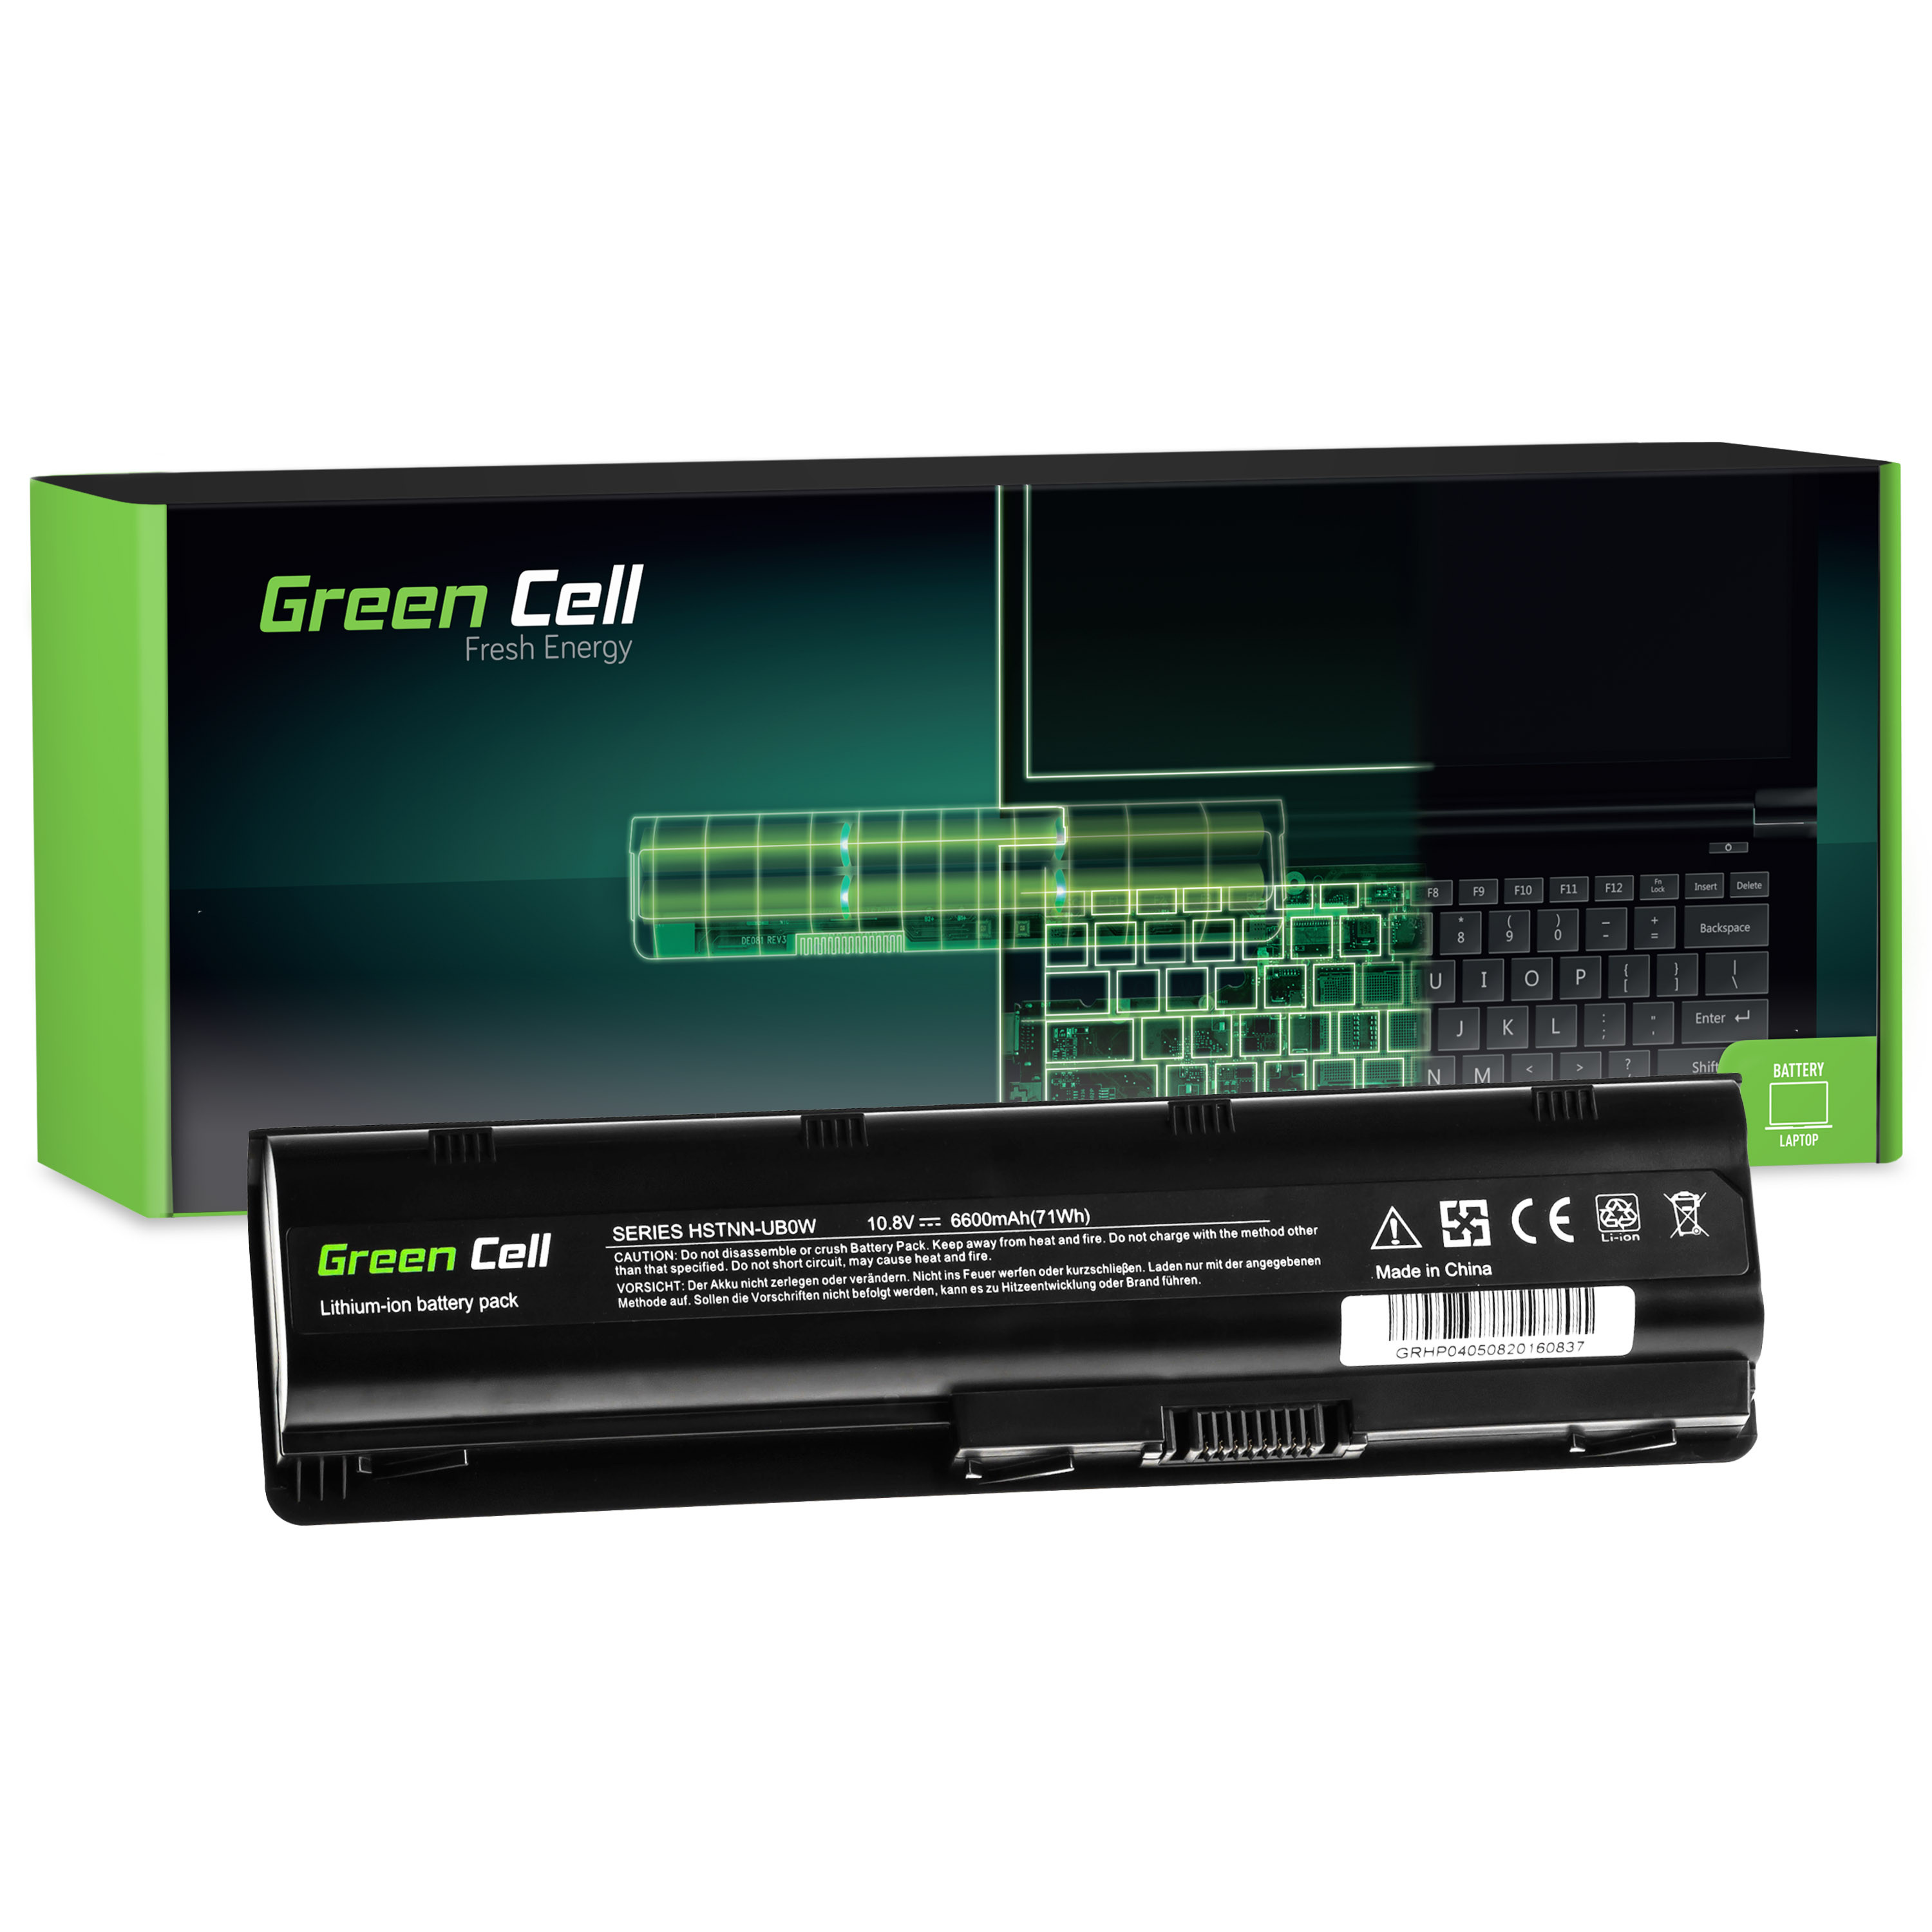 Green Cell HP04 Baterie HP Envy 17 G32 G42 G56 G62 G72 CQ42 CQ56 MU06 DM4 6600mAh Li-ion